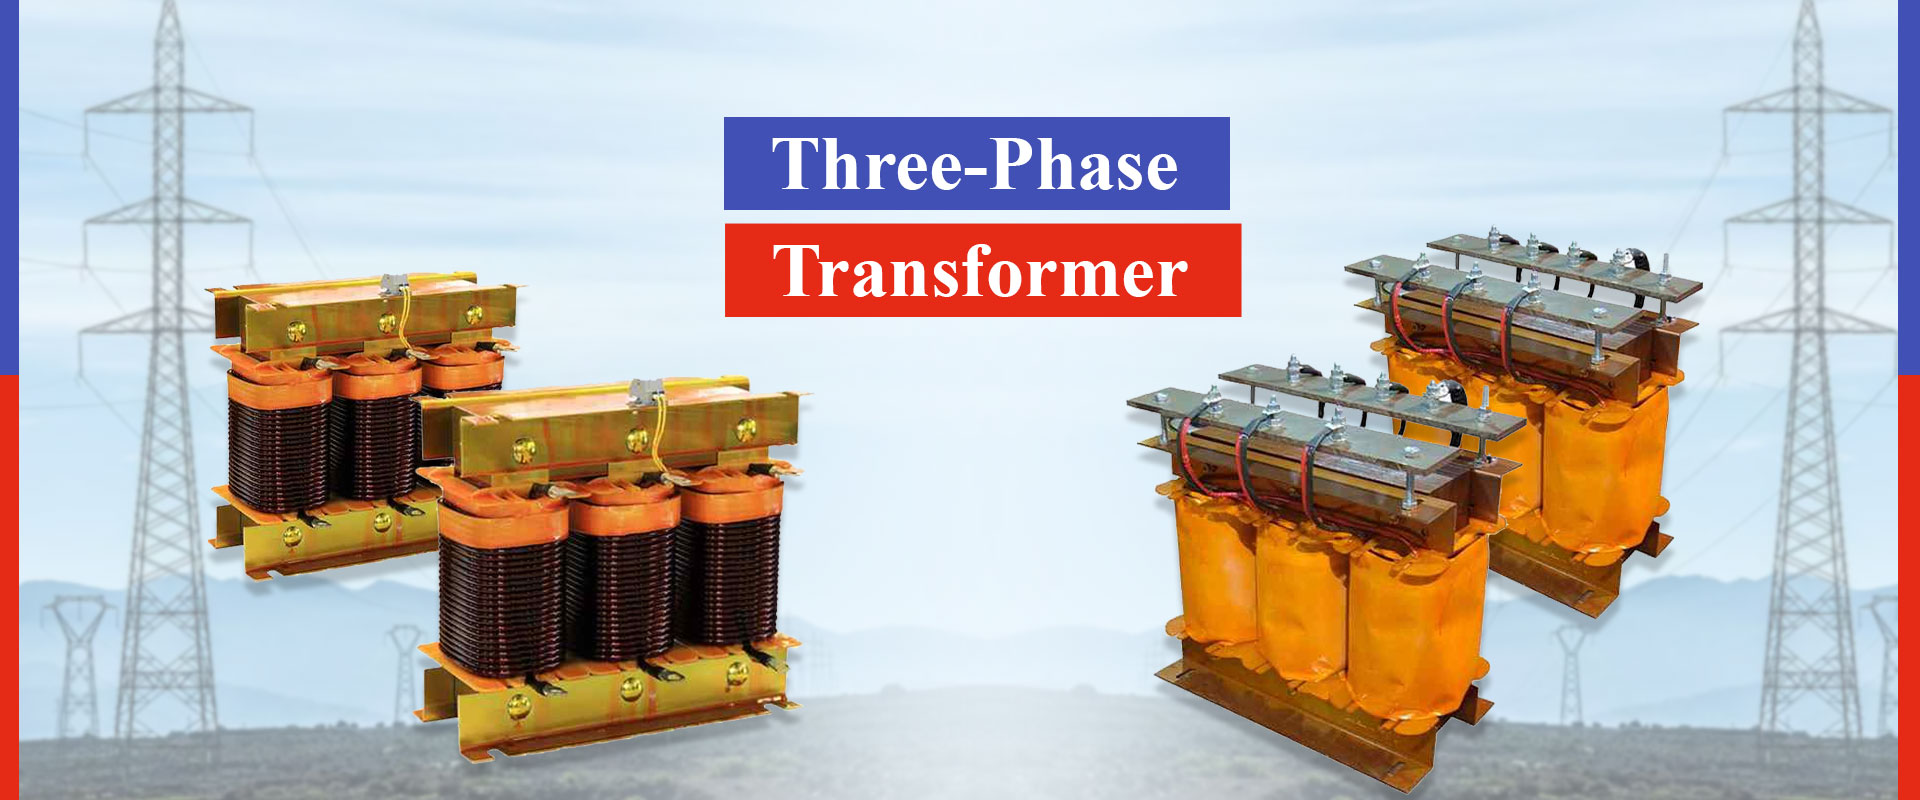 Three-Phase Transformer